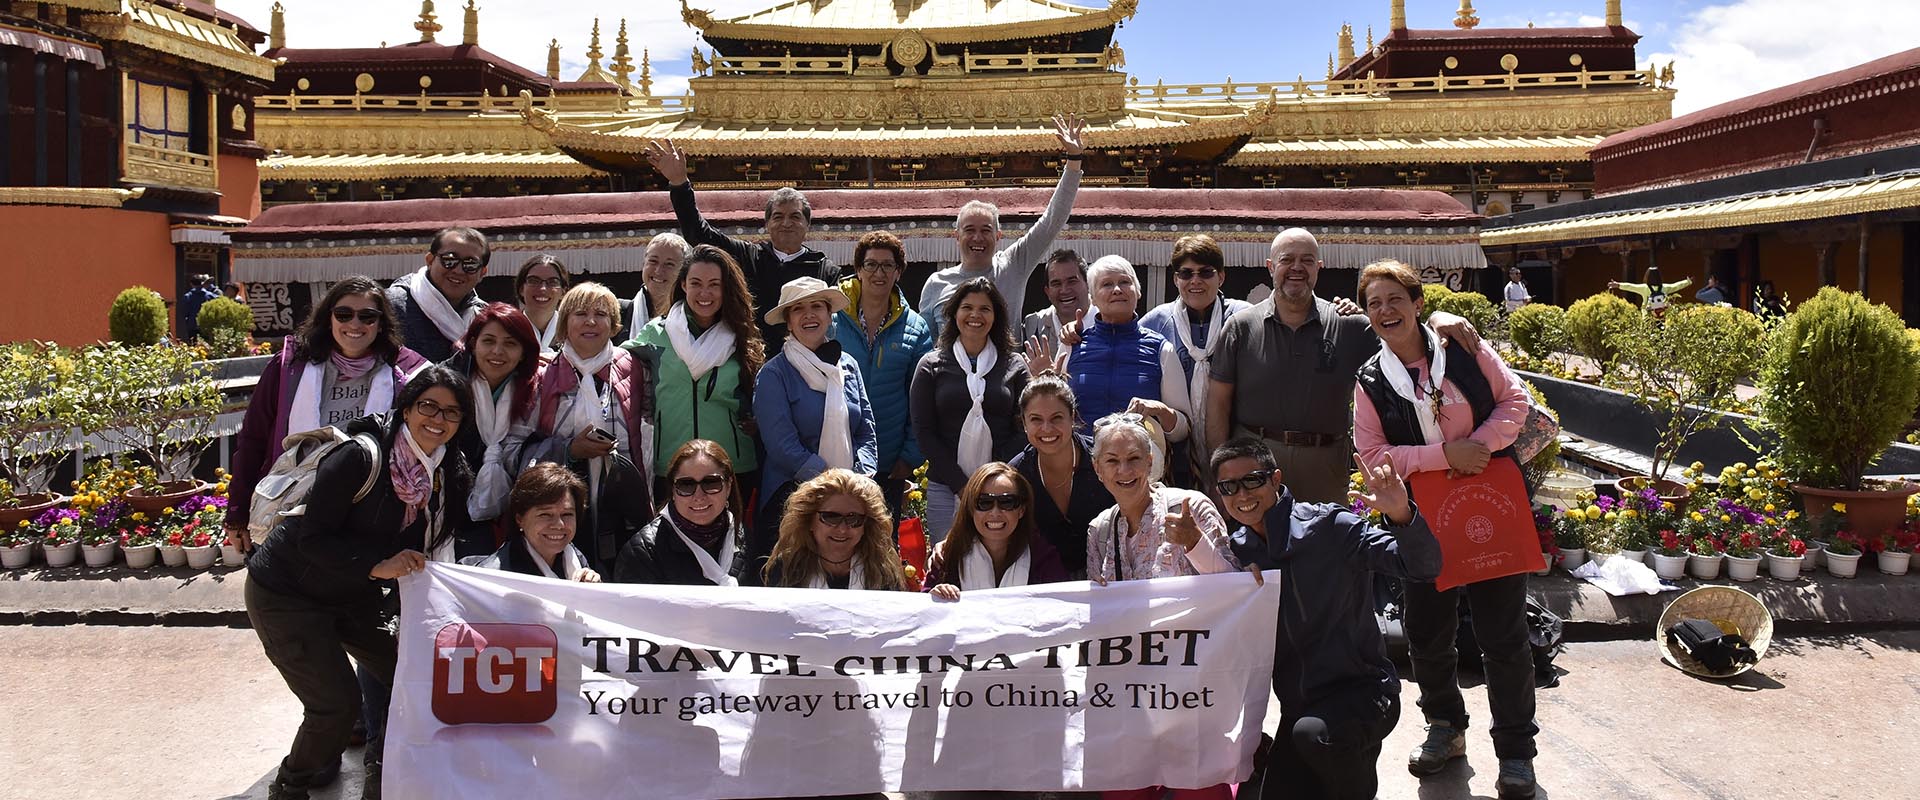 Your Gateway Travel to China & Tibet